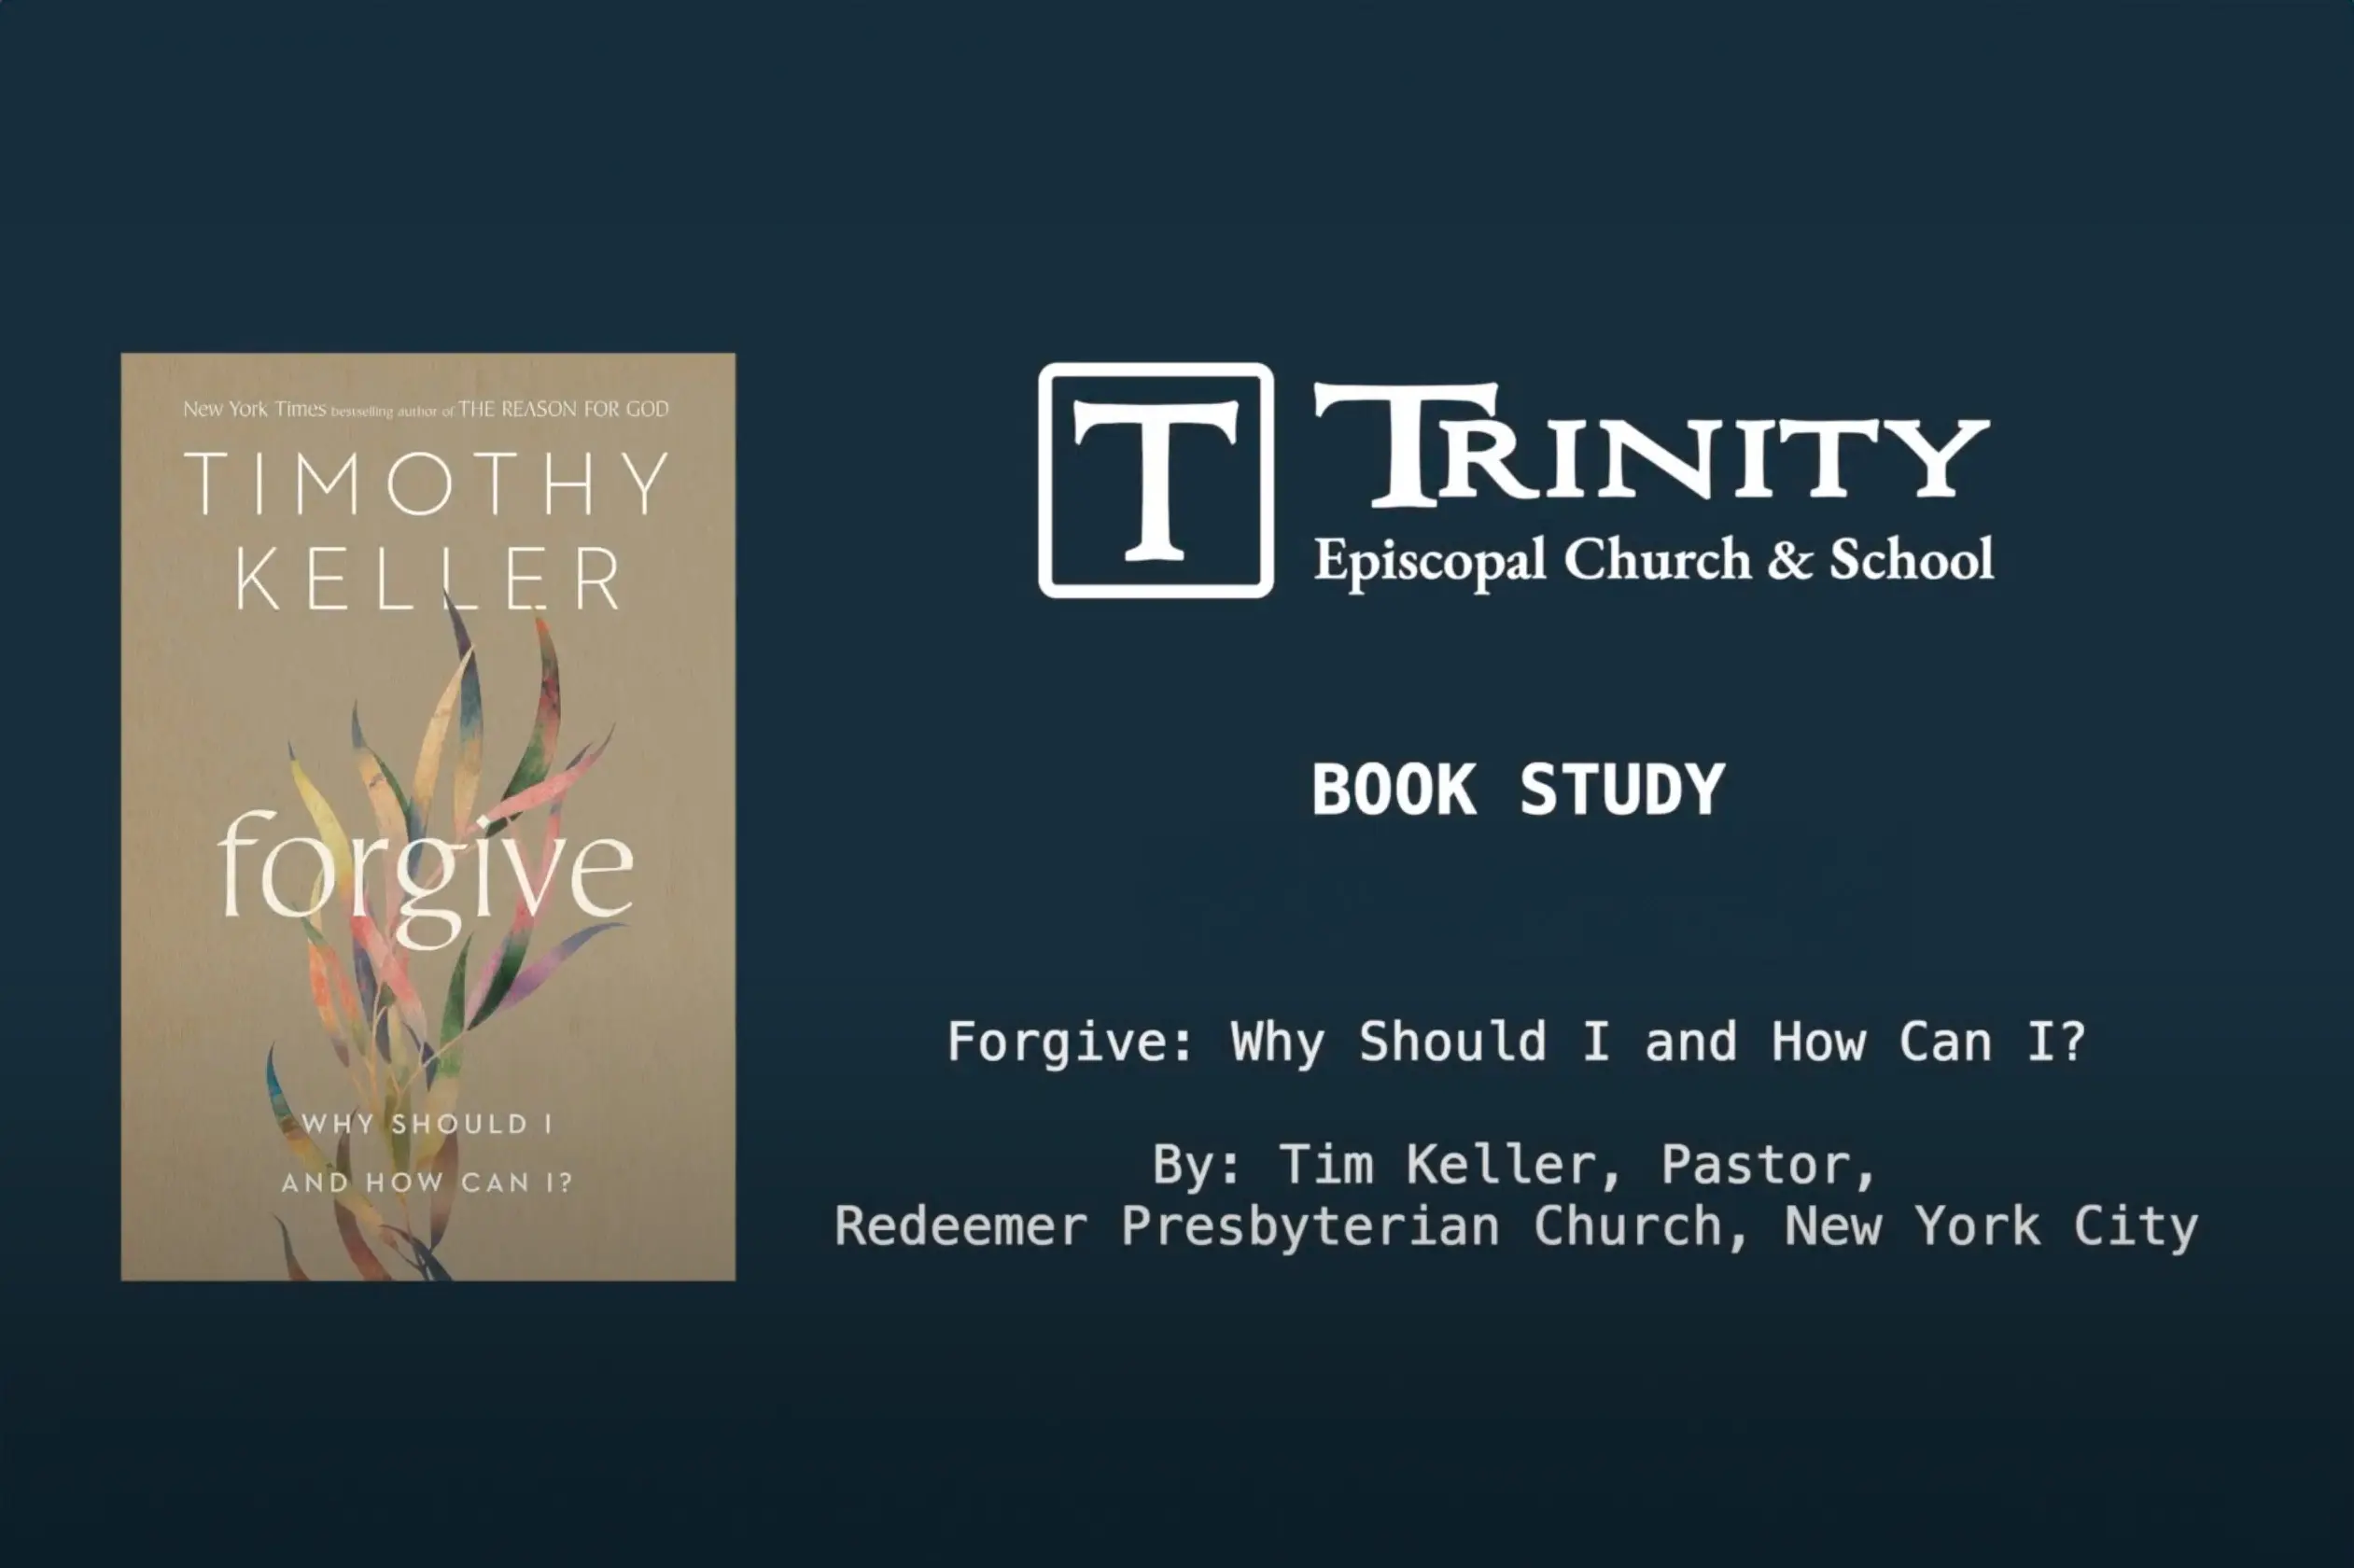 Trinity's Forgiveness Bookstudy